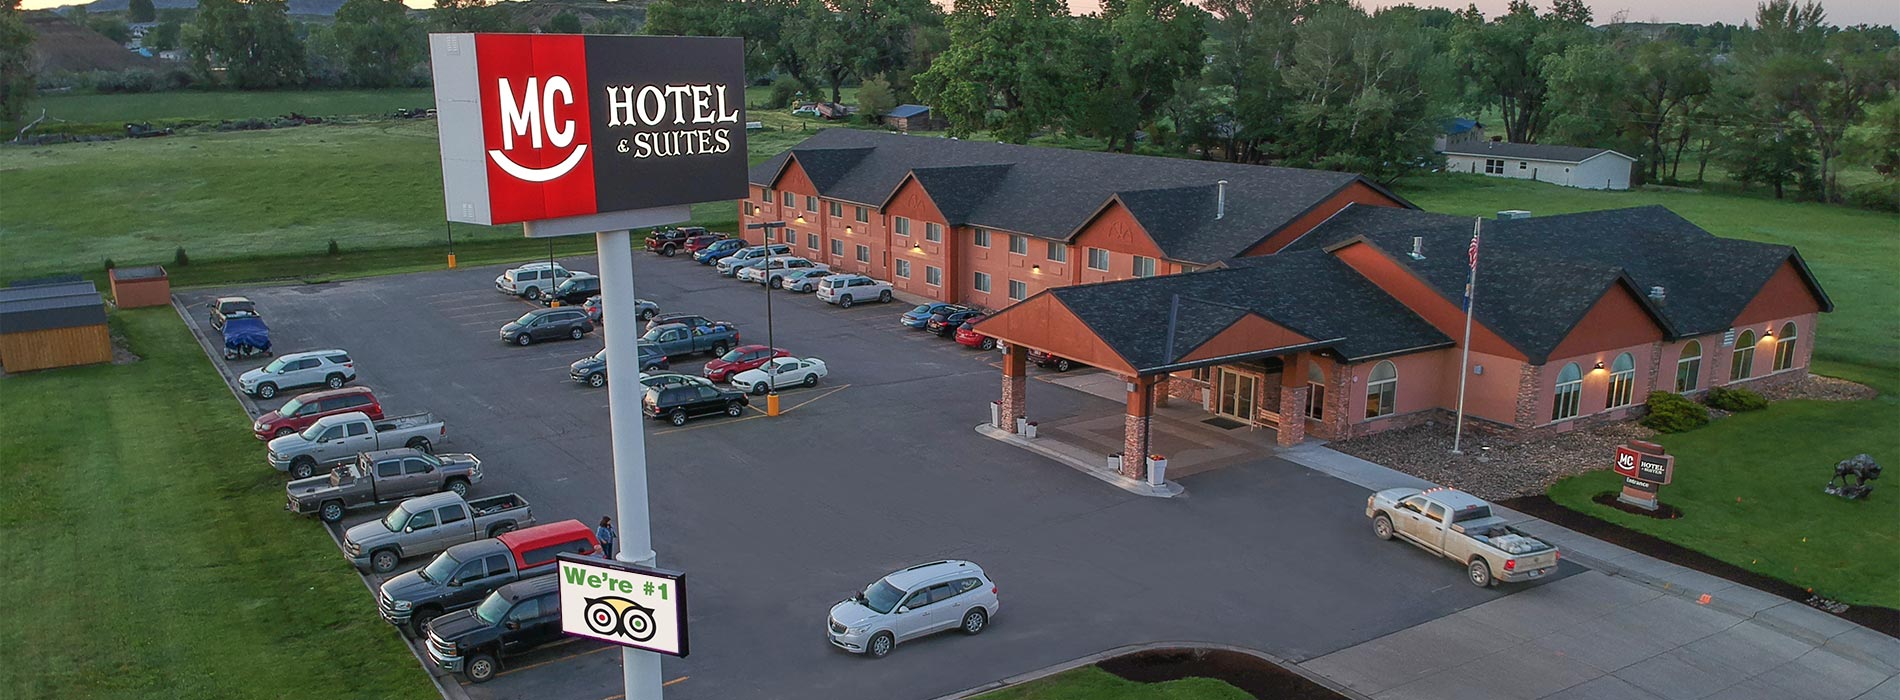 Miles City Hotel & Suites, Miles City Montana